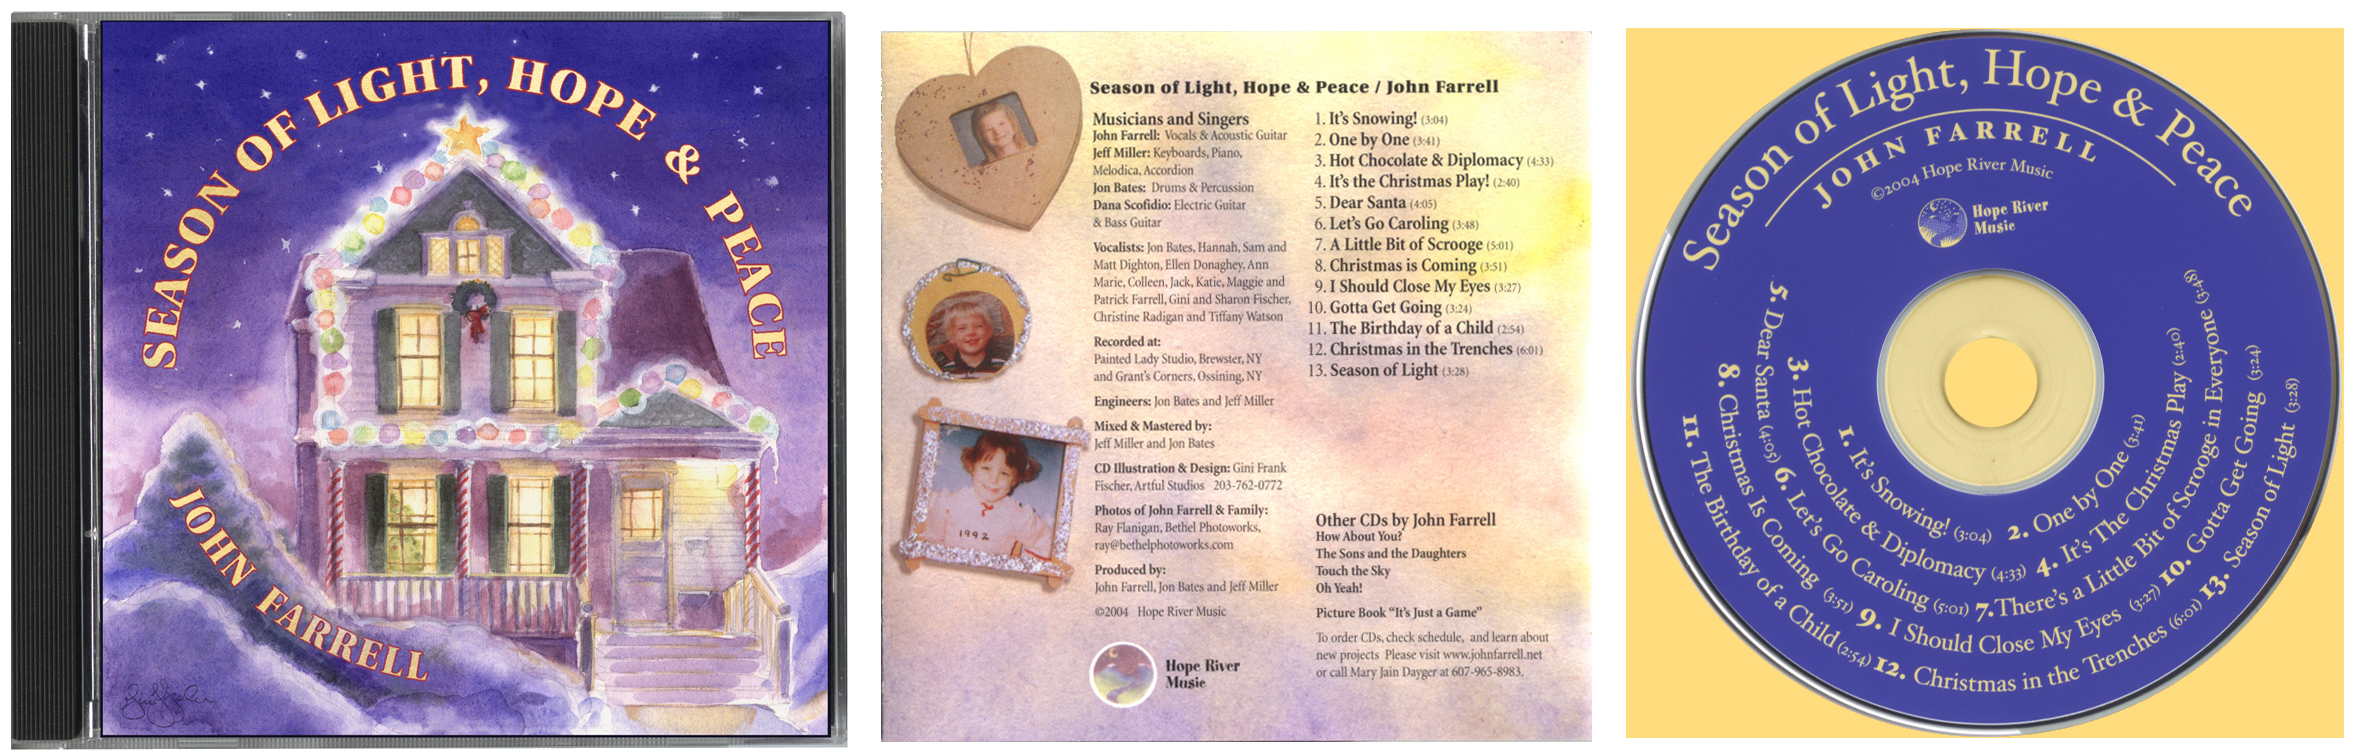 John Farrell's CD Season of Peace, Hope and Light CD packaging